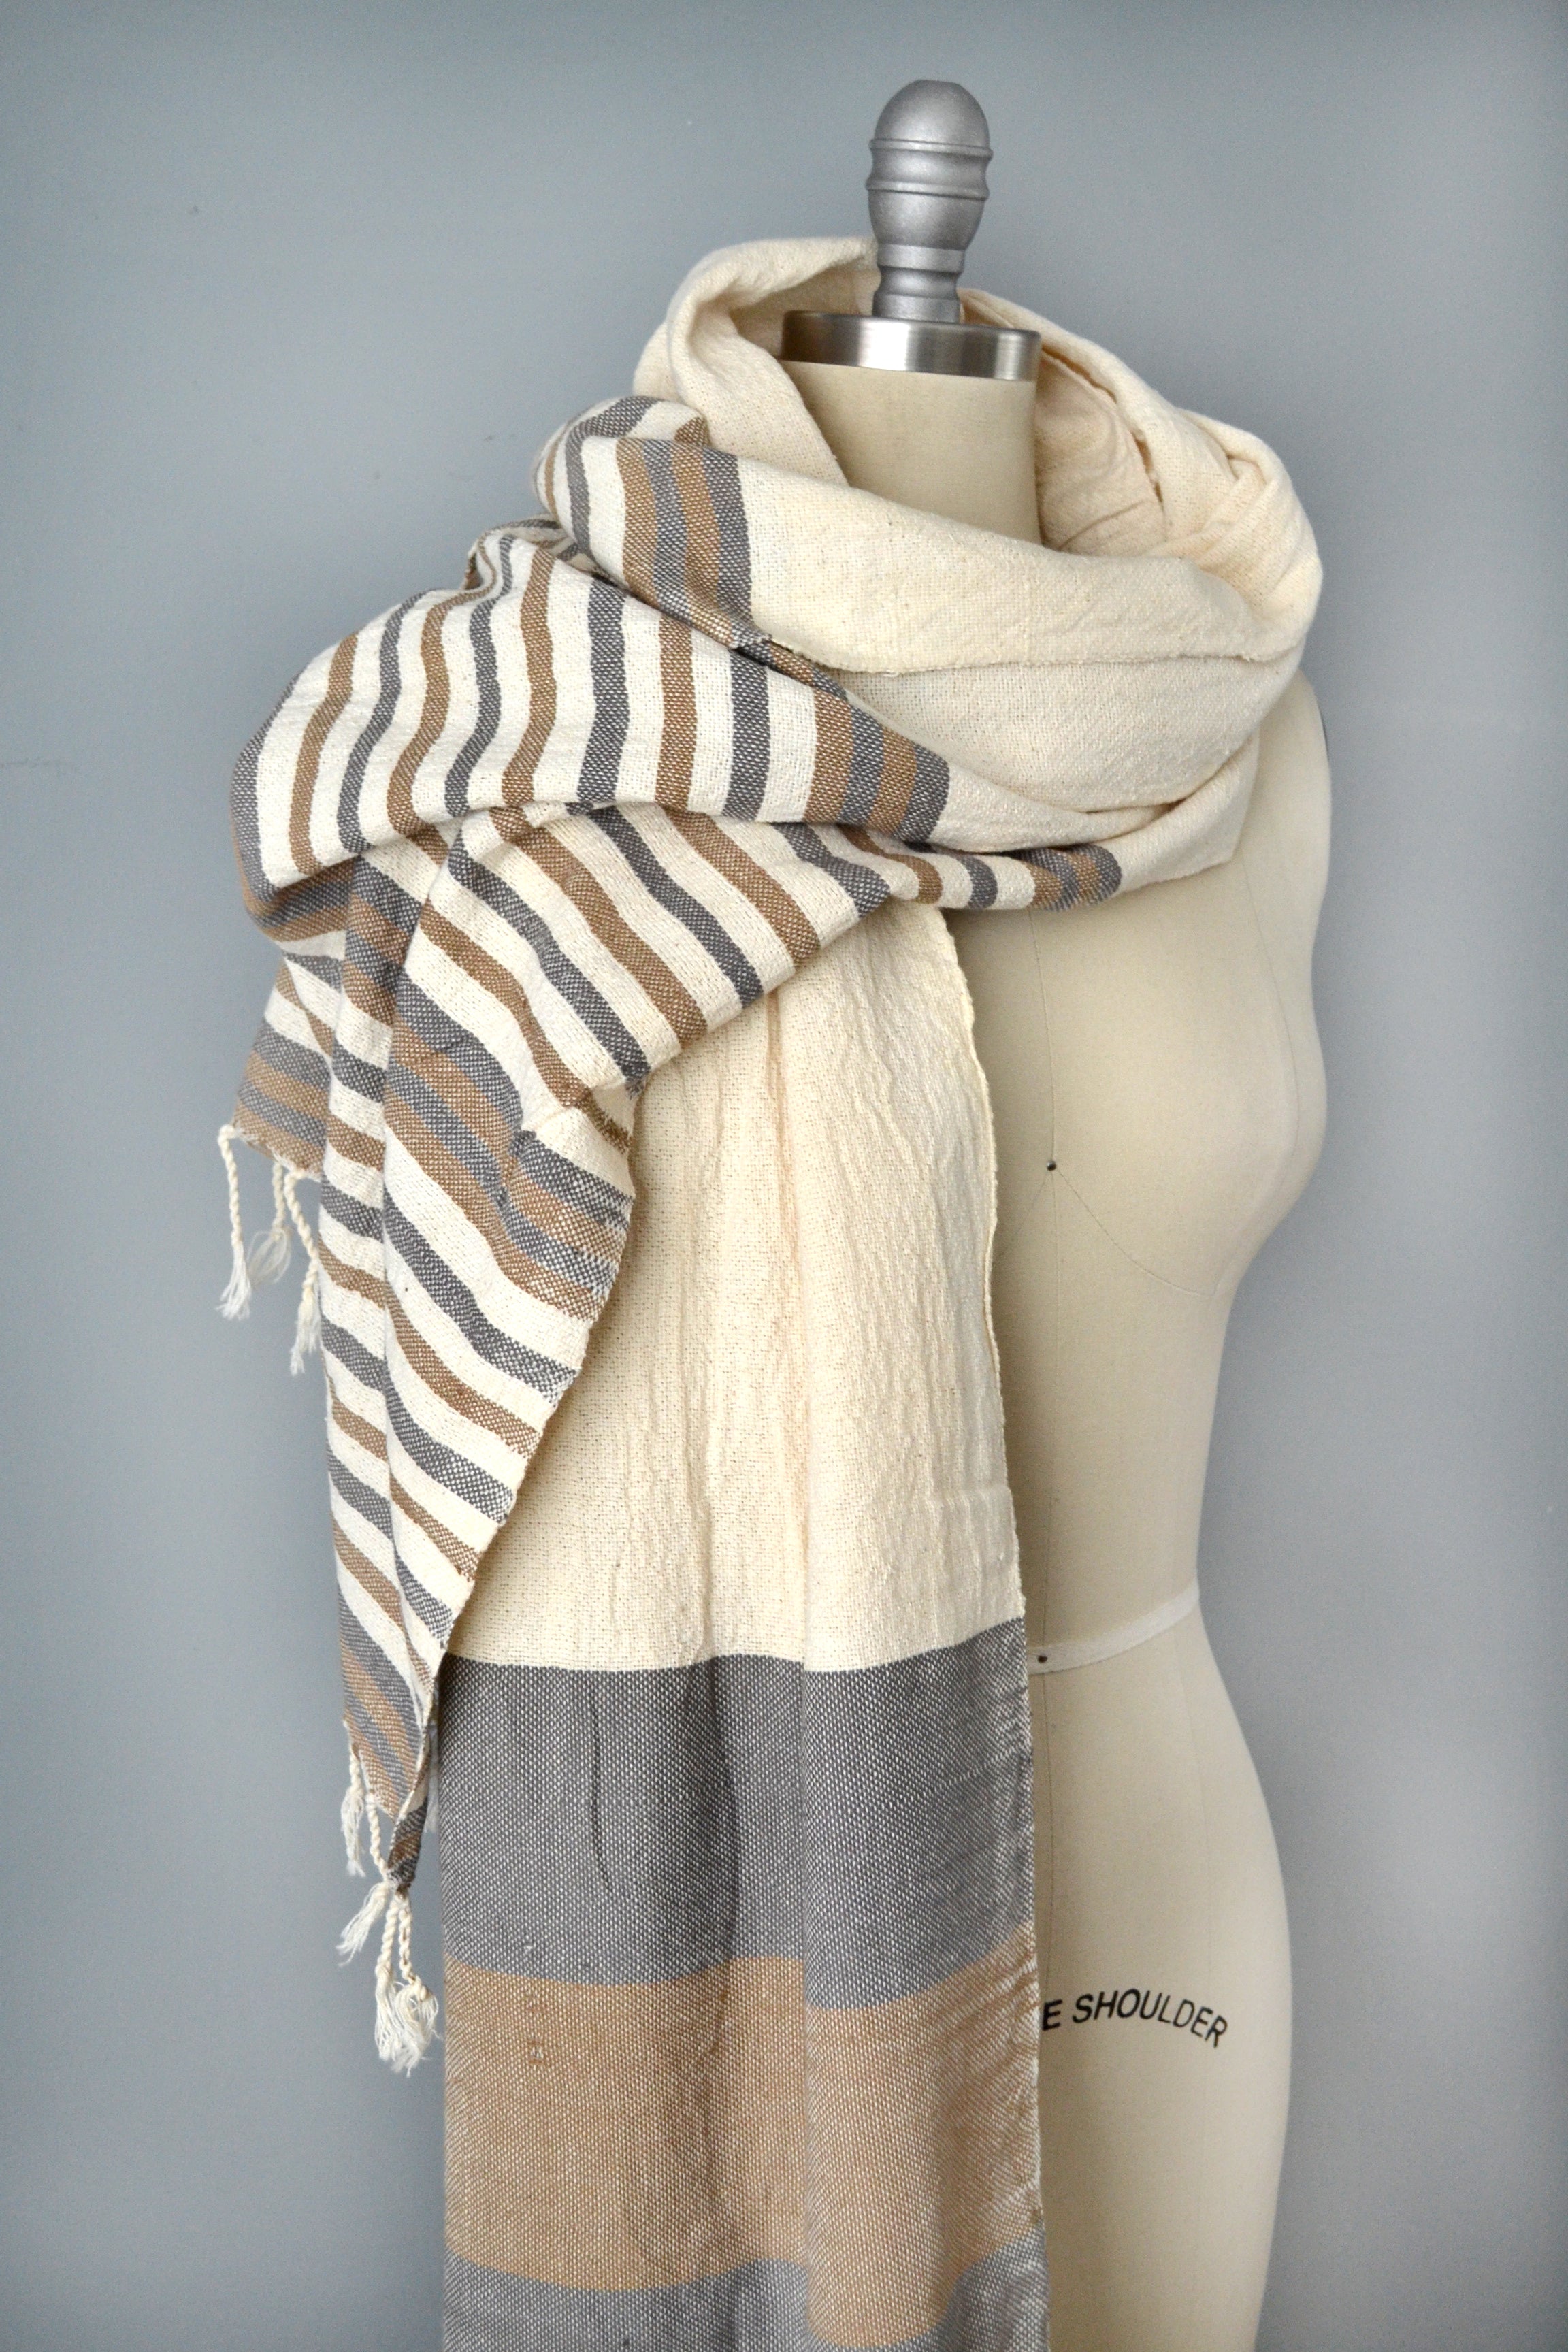 Neutral handmade striped cotton shawl by Yuba Mercantile